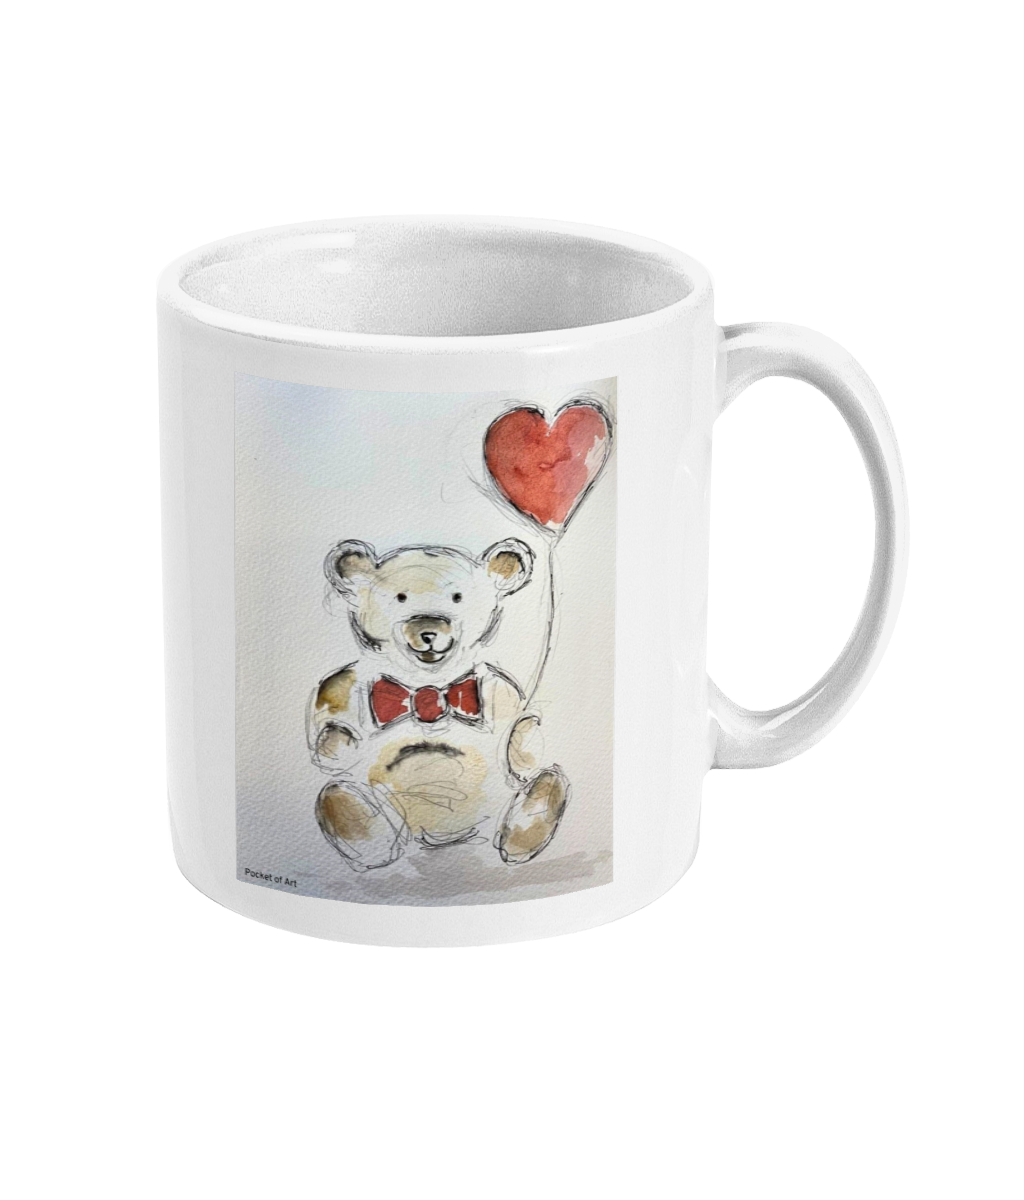 Mug with Teddy and Heart Balloon